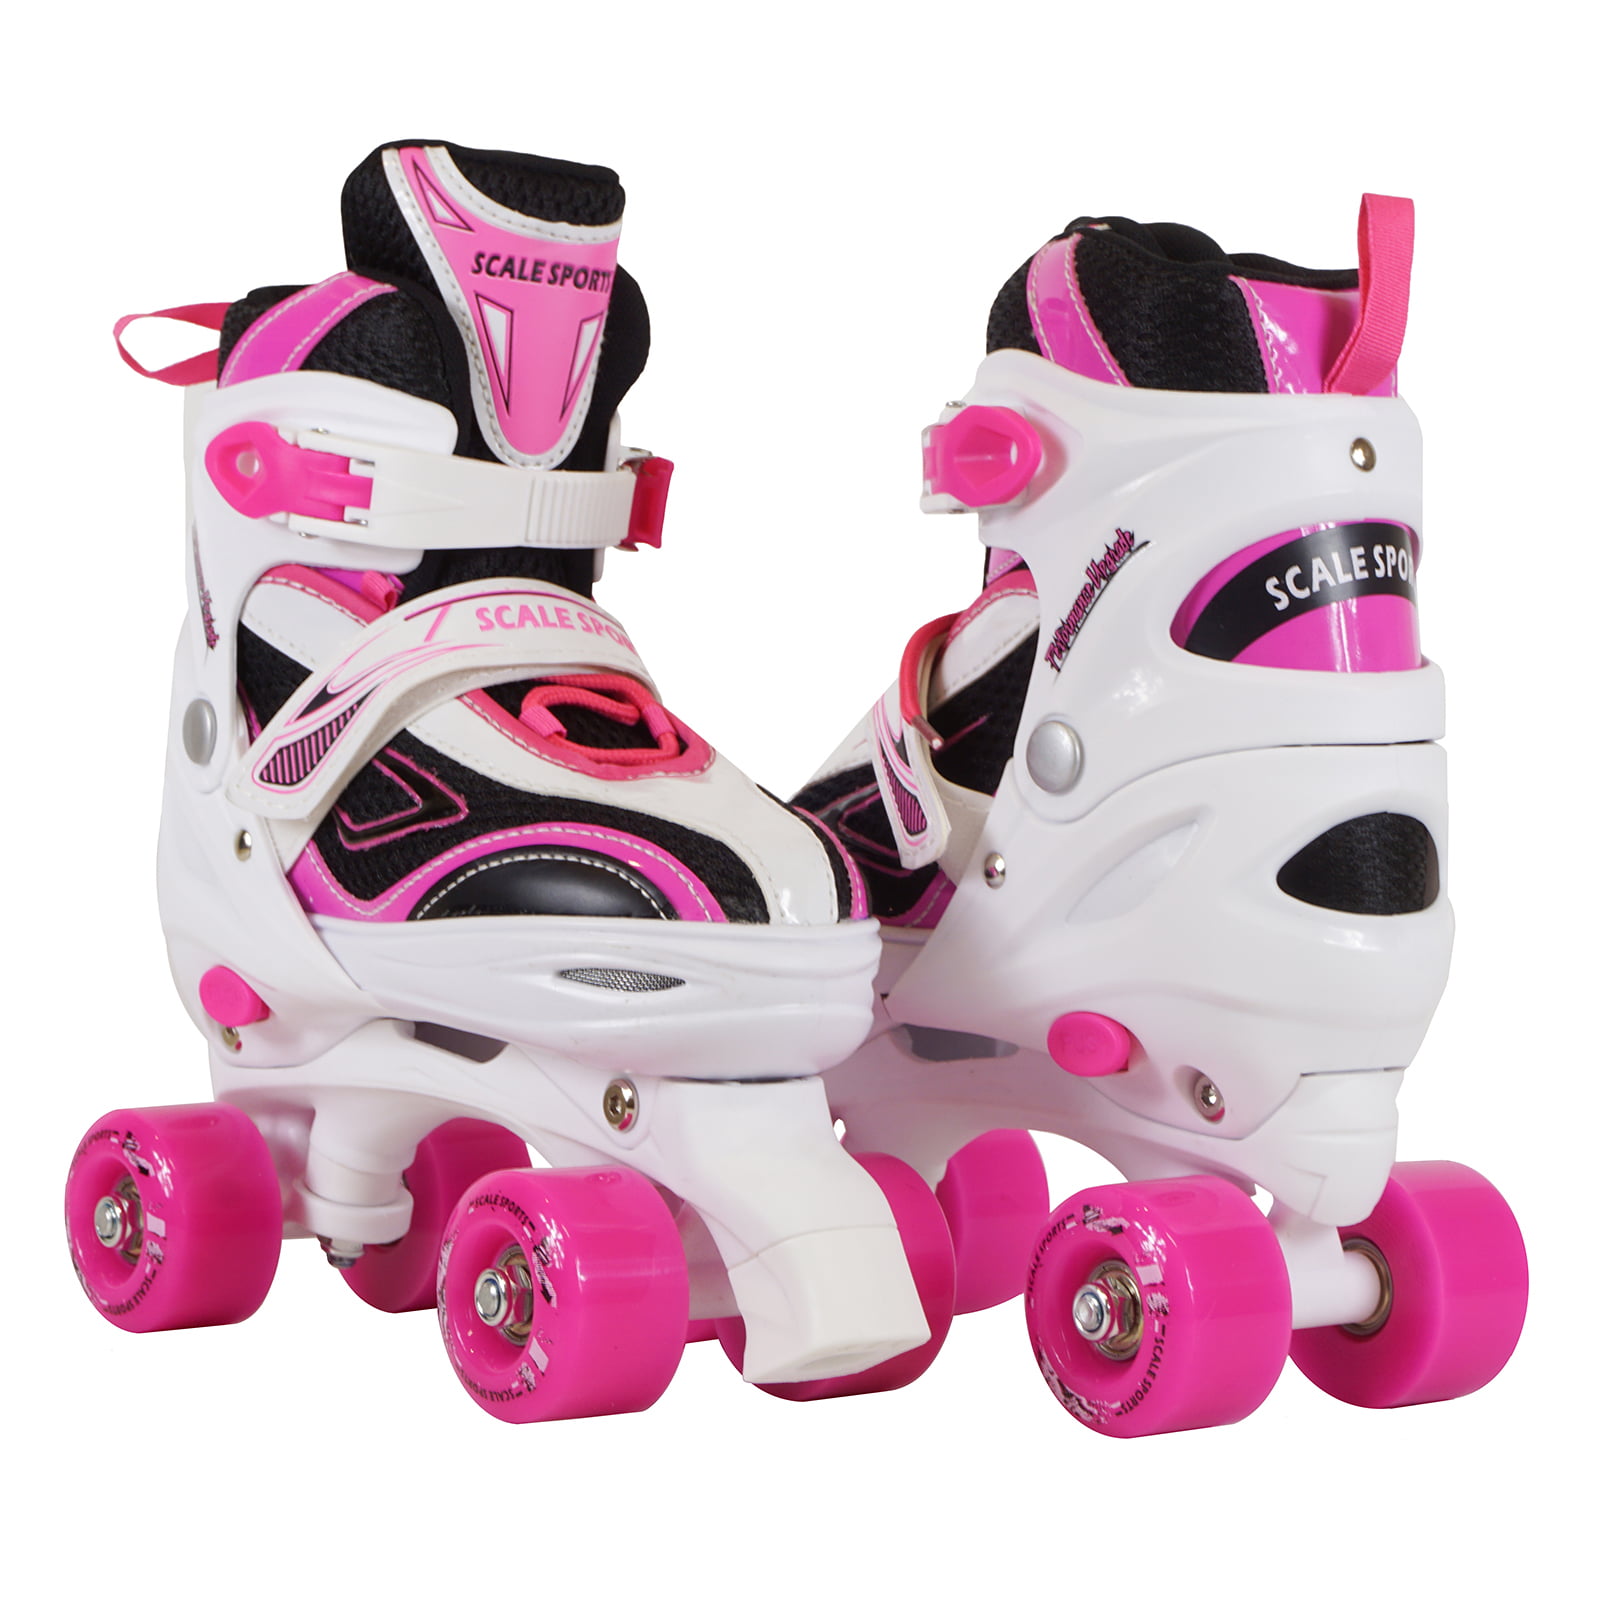 Adjustable Quad Roller Skates For Kids Teen And Ladies Large Size Pink